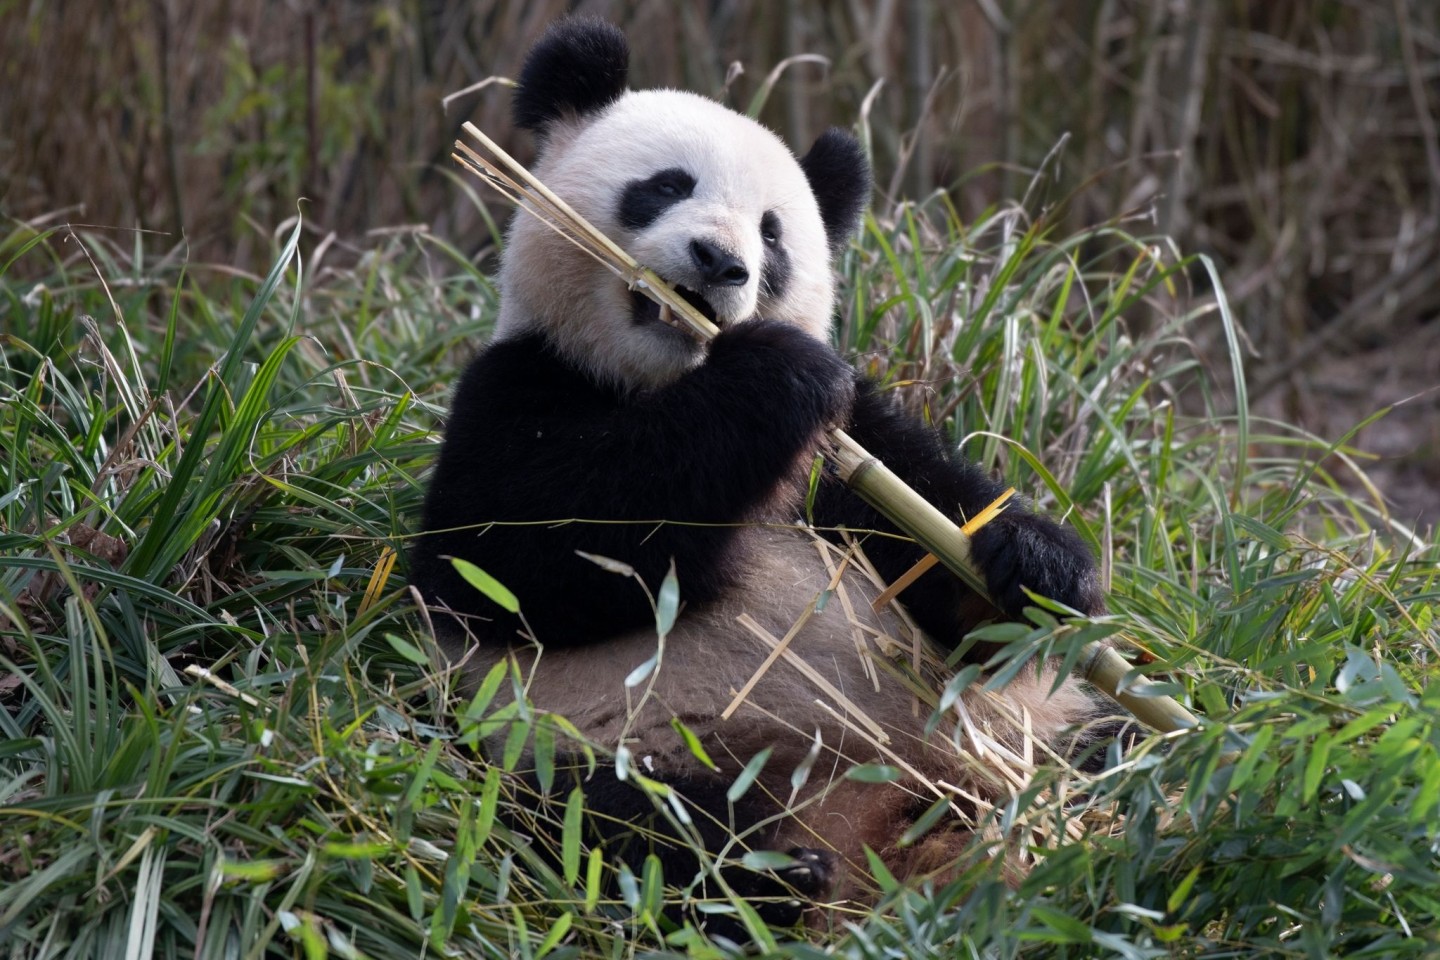 Das Zeitfenster, in dem Pandaweibchen wie Meng Meng empfängnisbereit sind, ist sehr kurz.